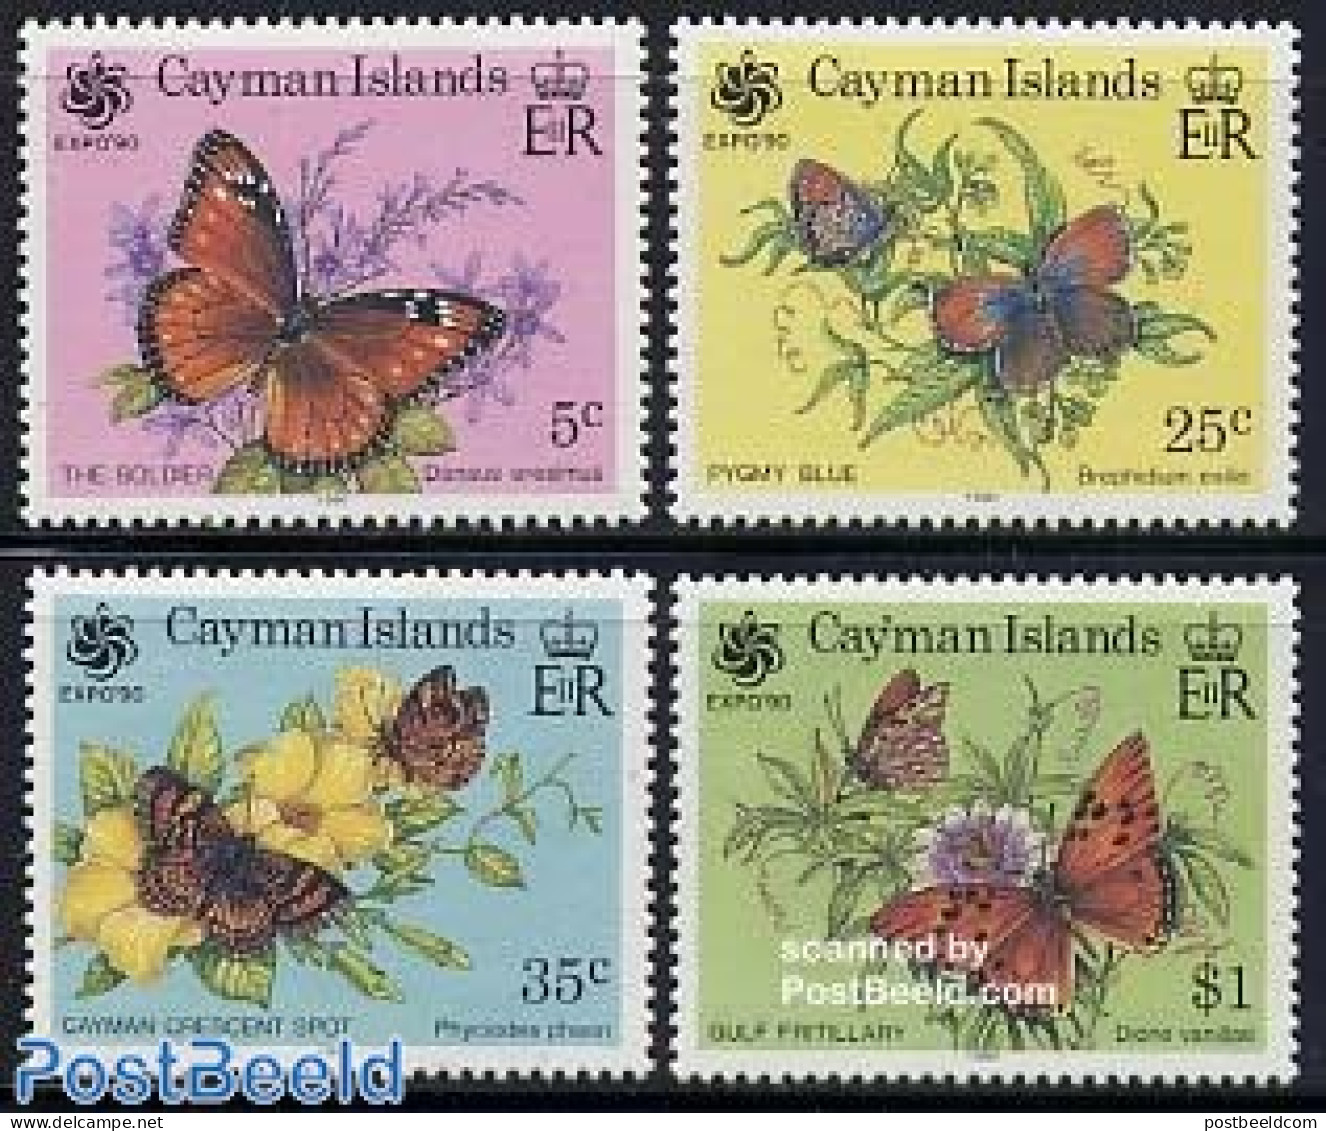 Cayman Islands 1990 Expo, Butterflies 4v, Unused (hinged), Nature - Butterflies - Kaimaninseln